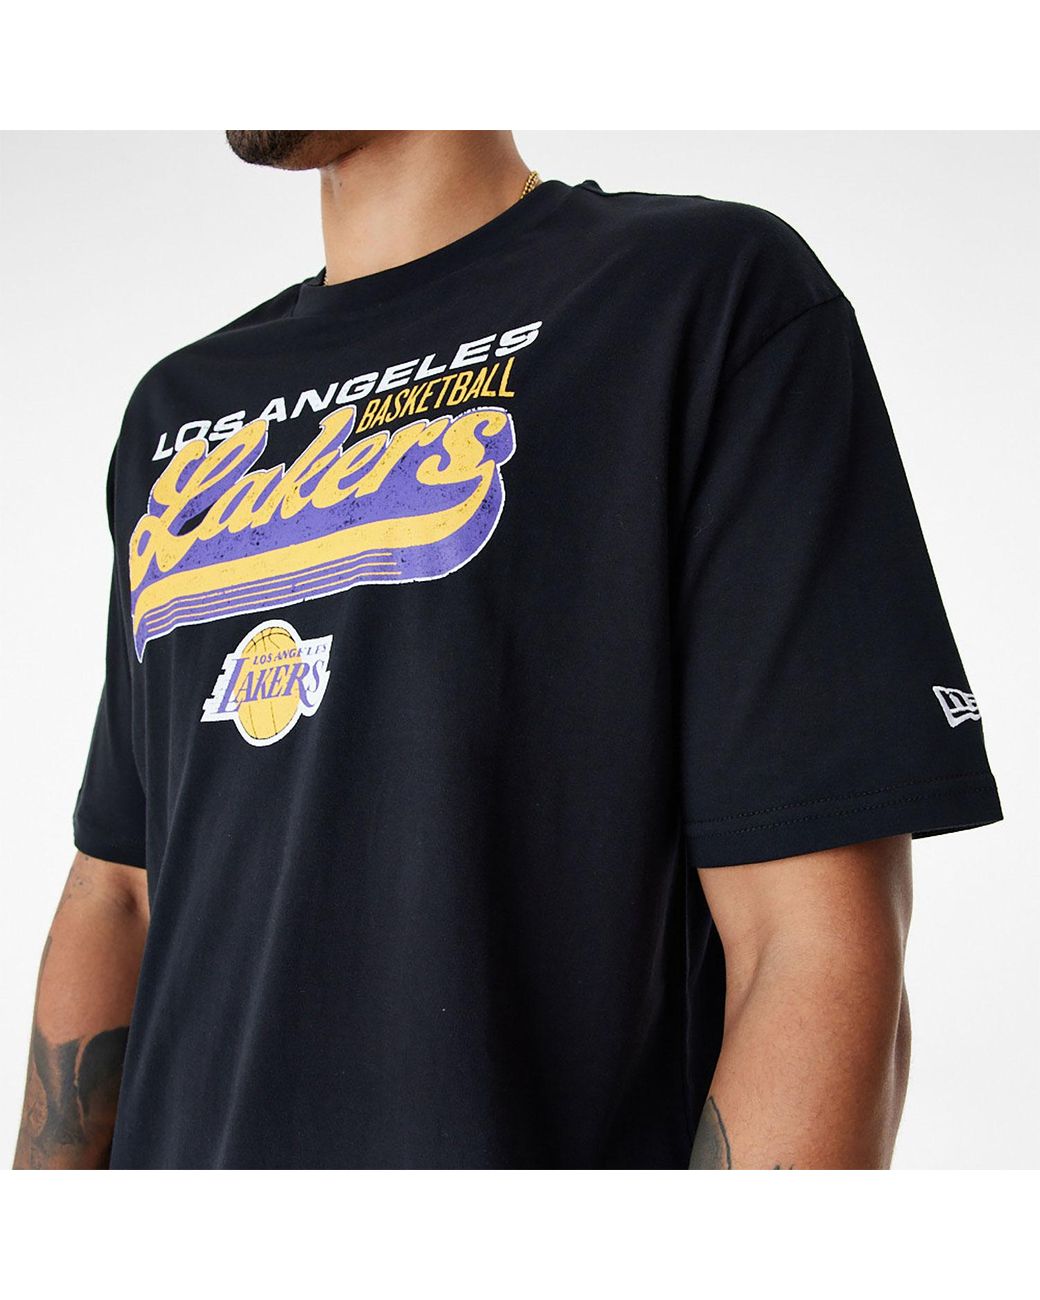 KTZ New Balance NBA Team Logo Los Angeles Lakers Shorts Grey - M